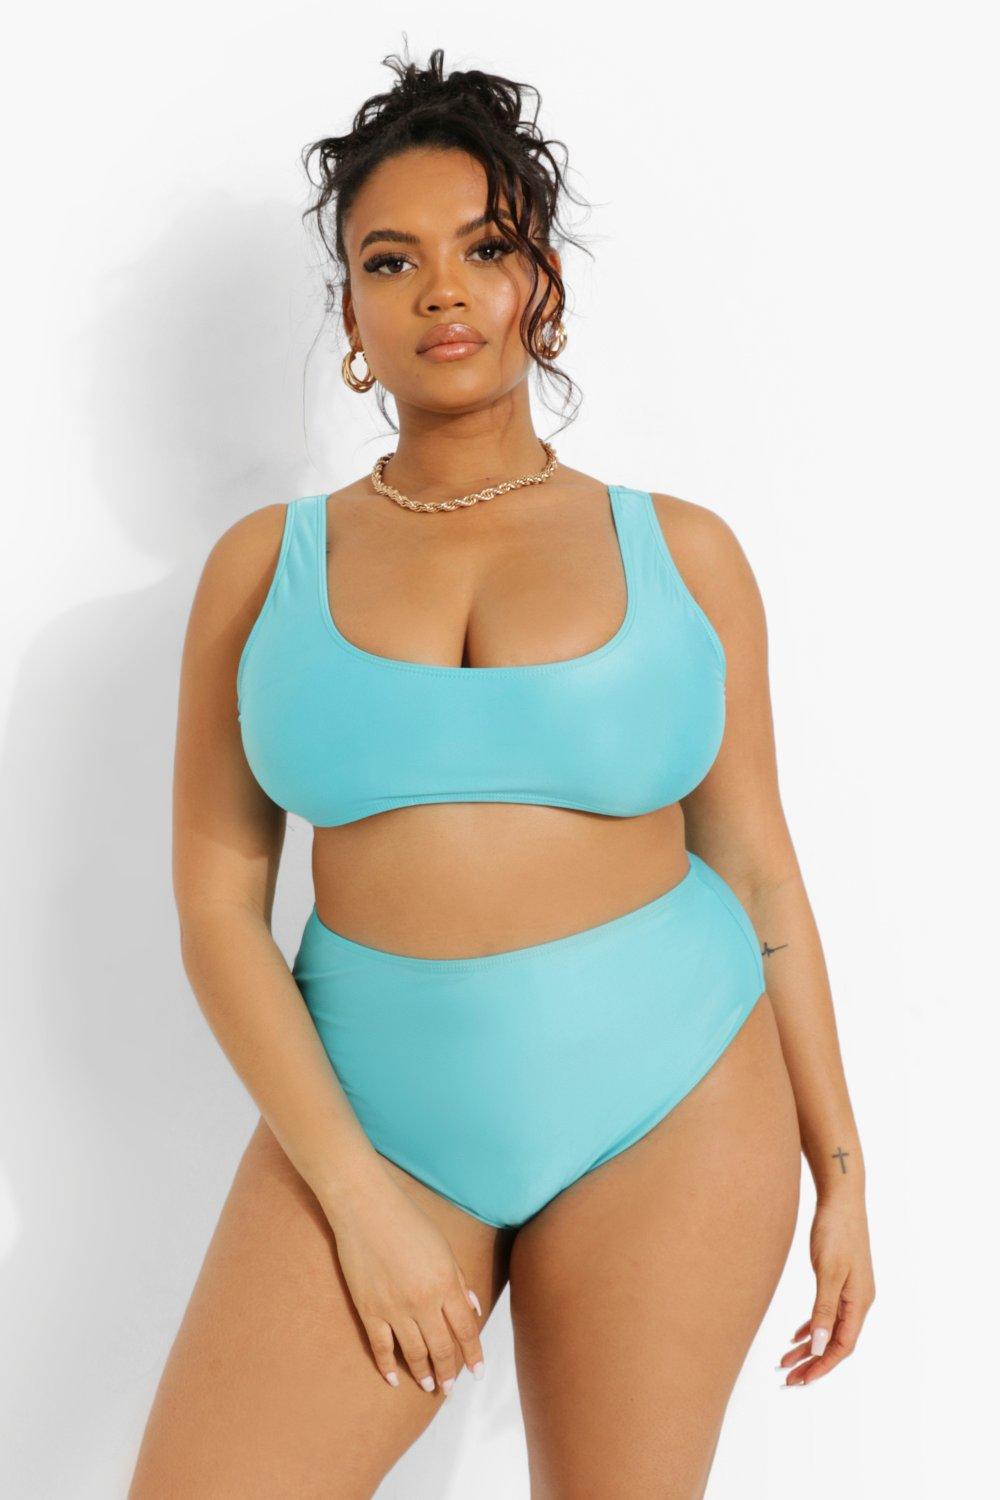 SELONE Plus Size Swimsuit for Women 3 Piece Bikini High Waisted Long Sleeve  Hawaiian Beach Beachwear Fashion Tummy Control Swimsuits Plus Size Bathing